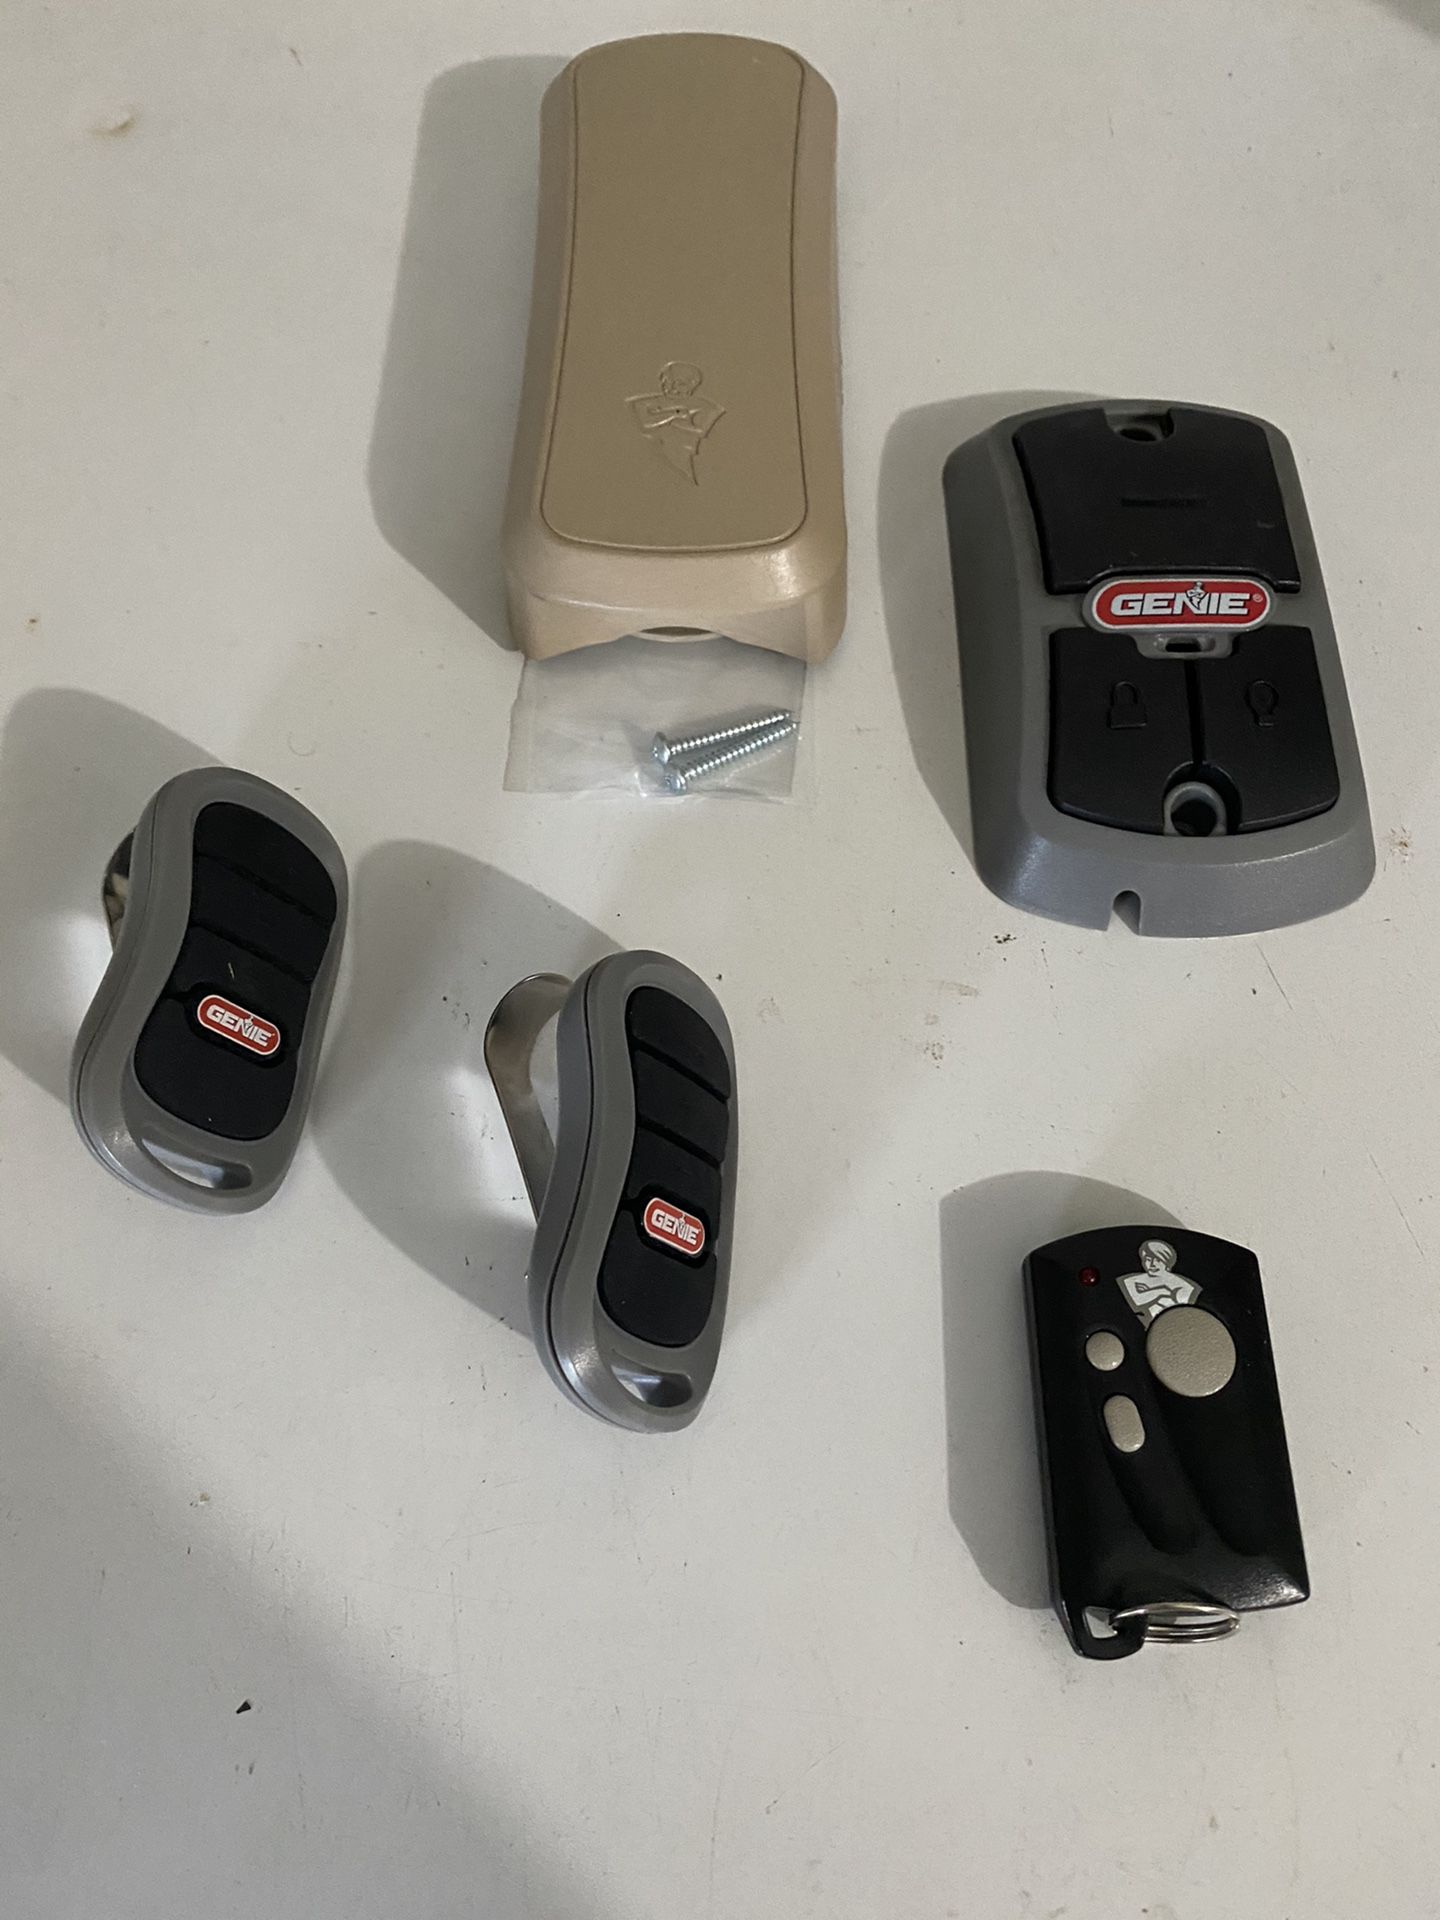 Genie Garage Door Car Remotes(2), Keychain Remote(1), Wall Button(1), Key Pad (1).